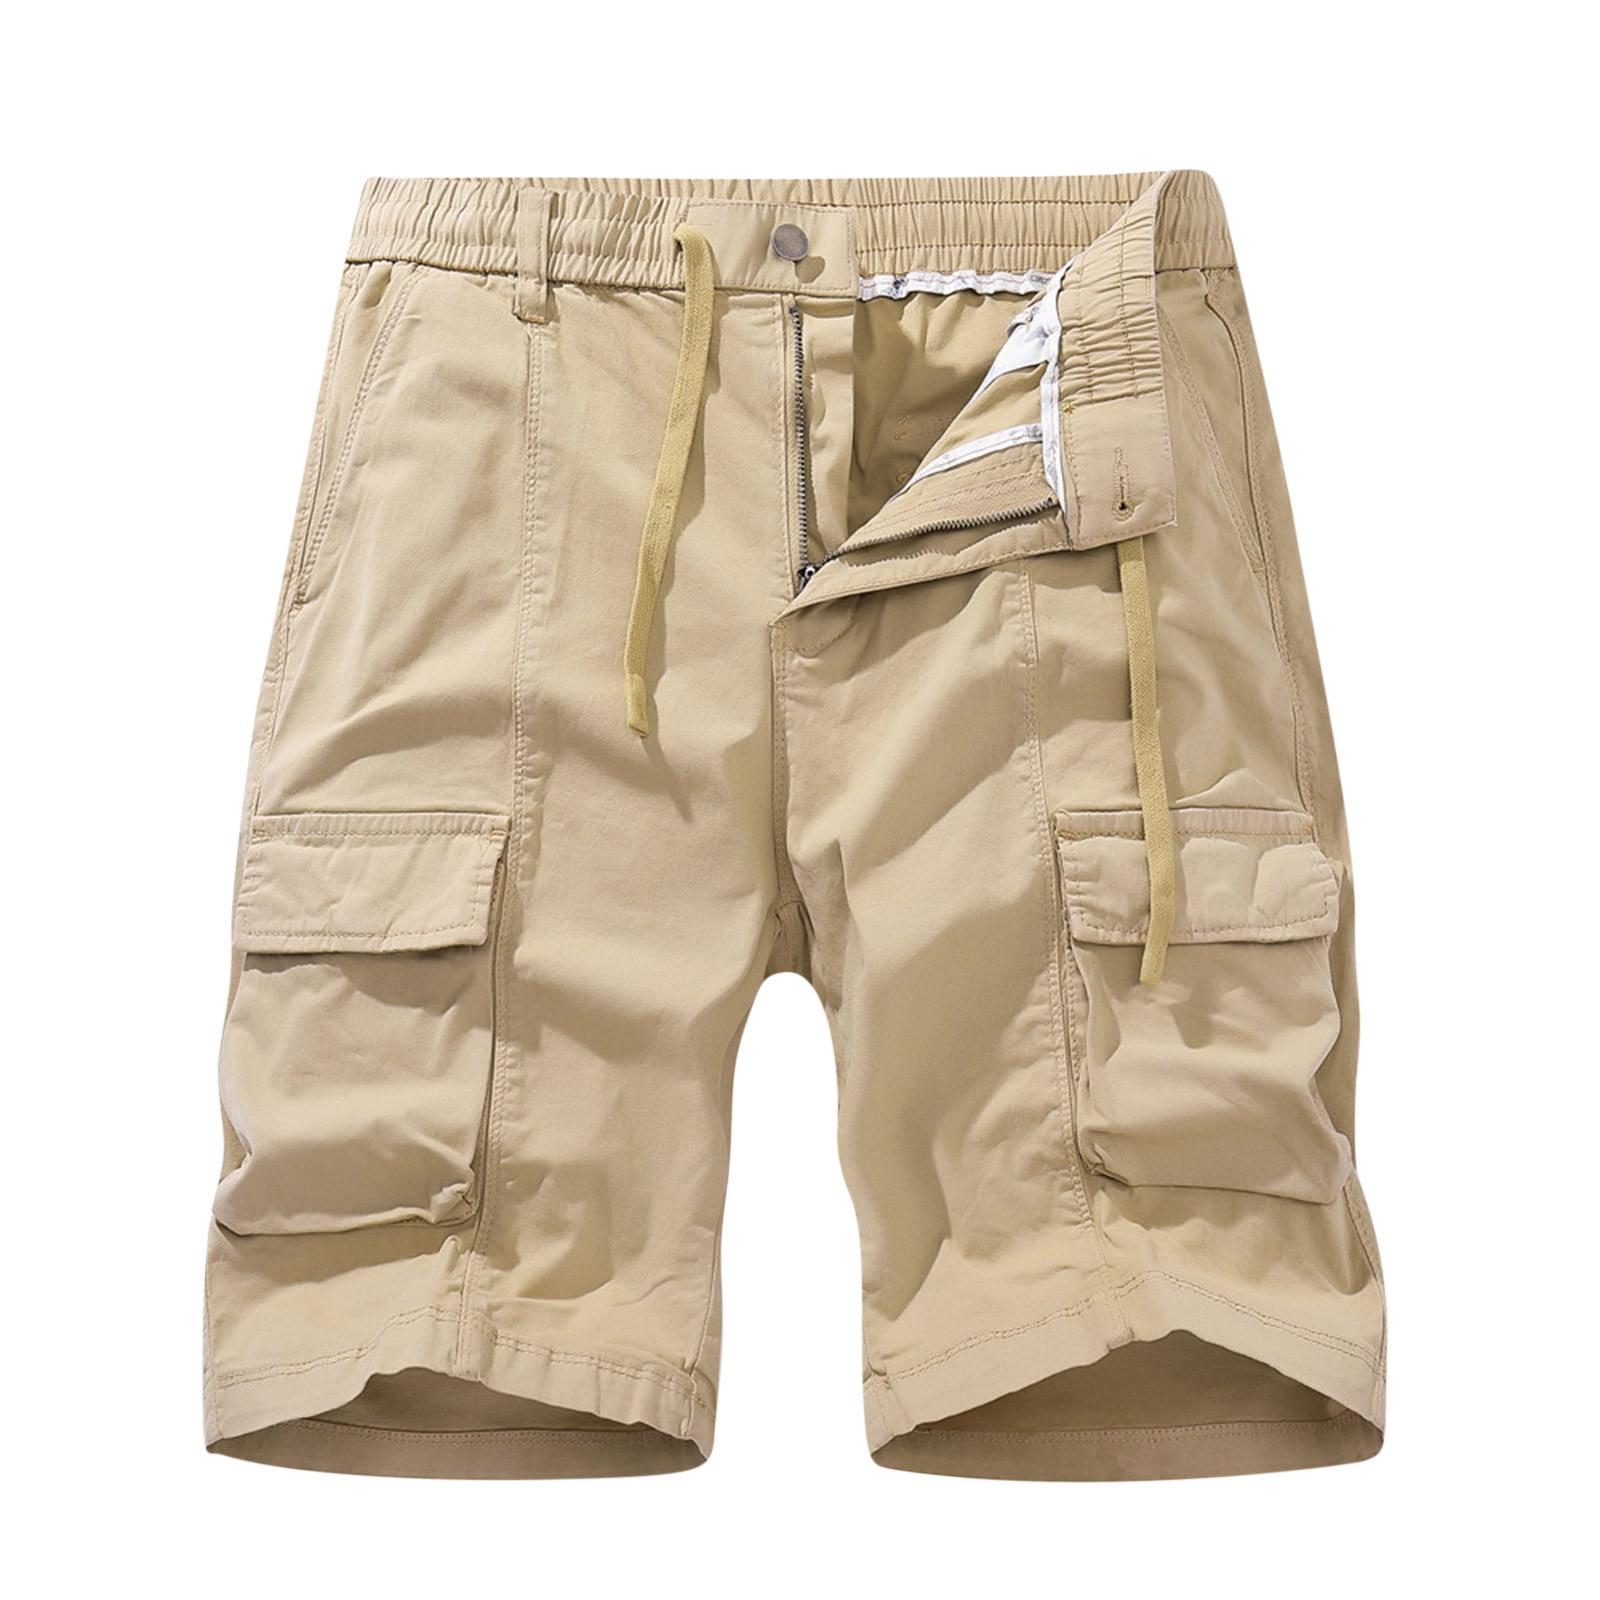 Hot6sl Cargo Shorts for Men, Lightweight Short Pants 100% Cotton Army Green  L #3 